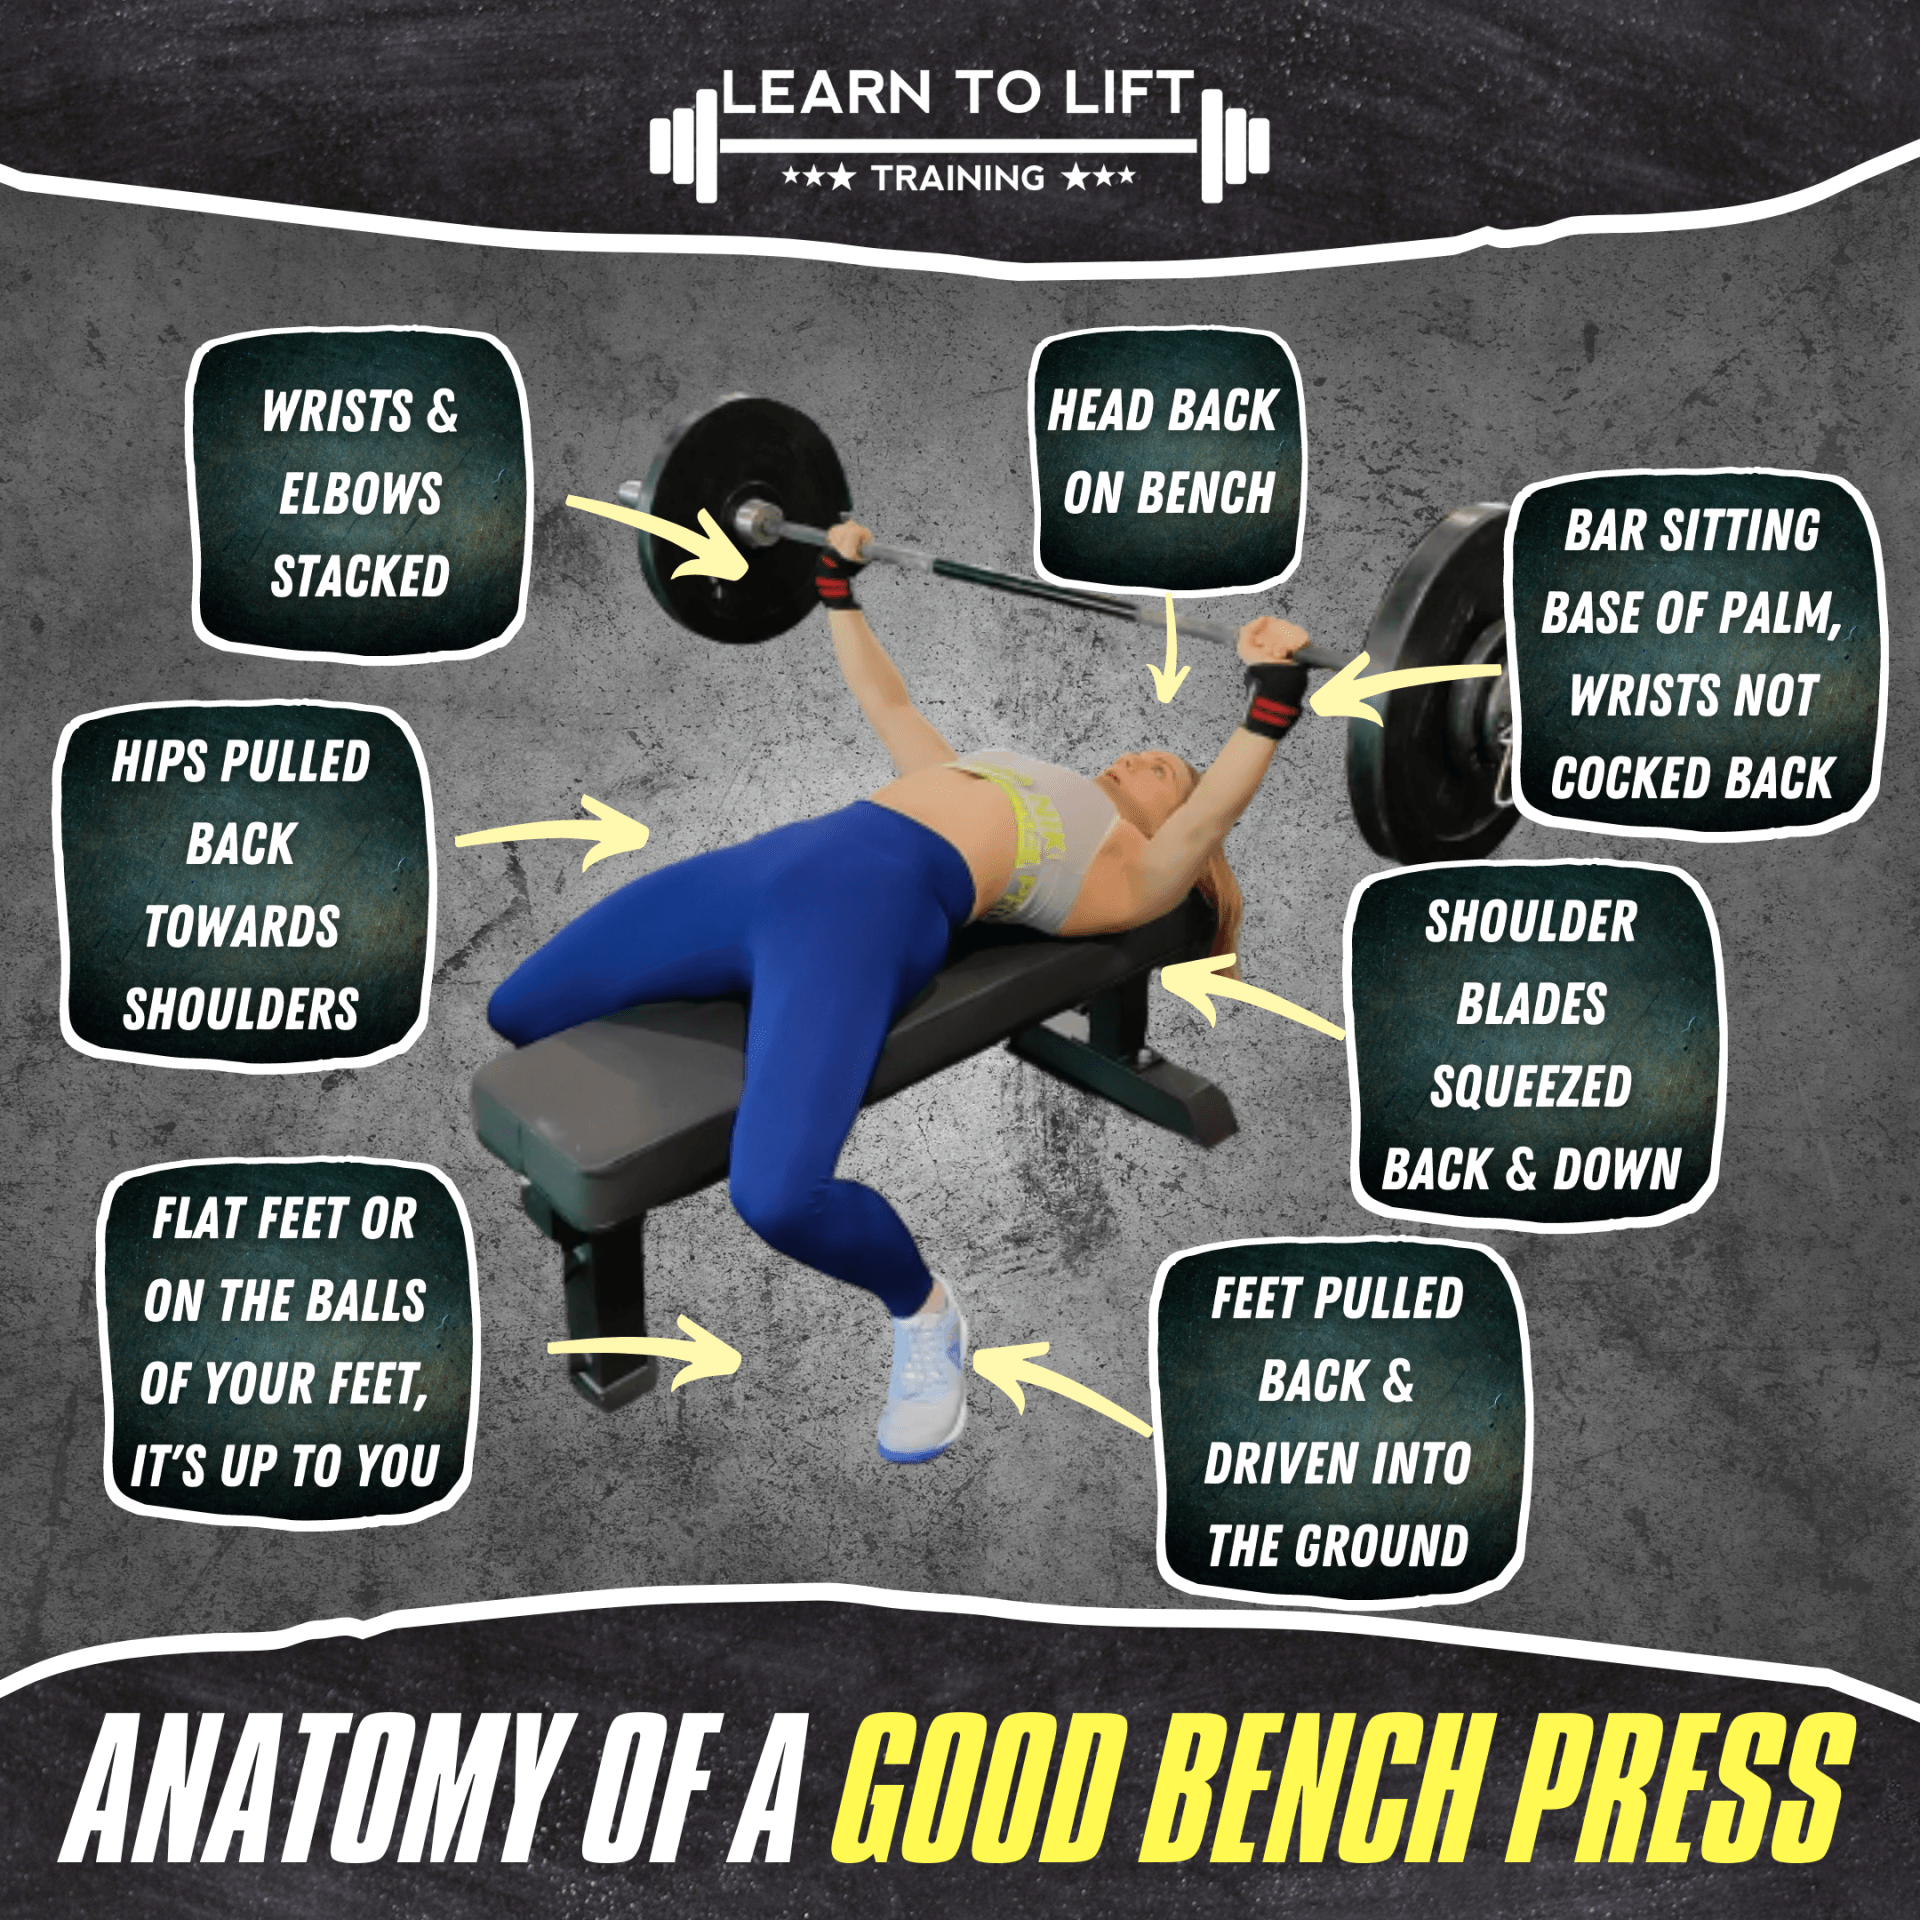 Personal Training Glasgow - Anatomy Of A Good Bench Press